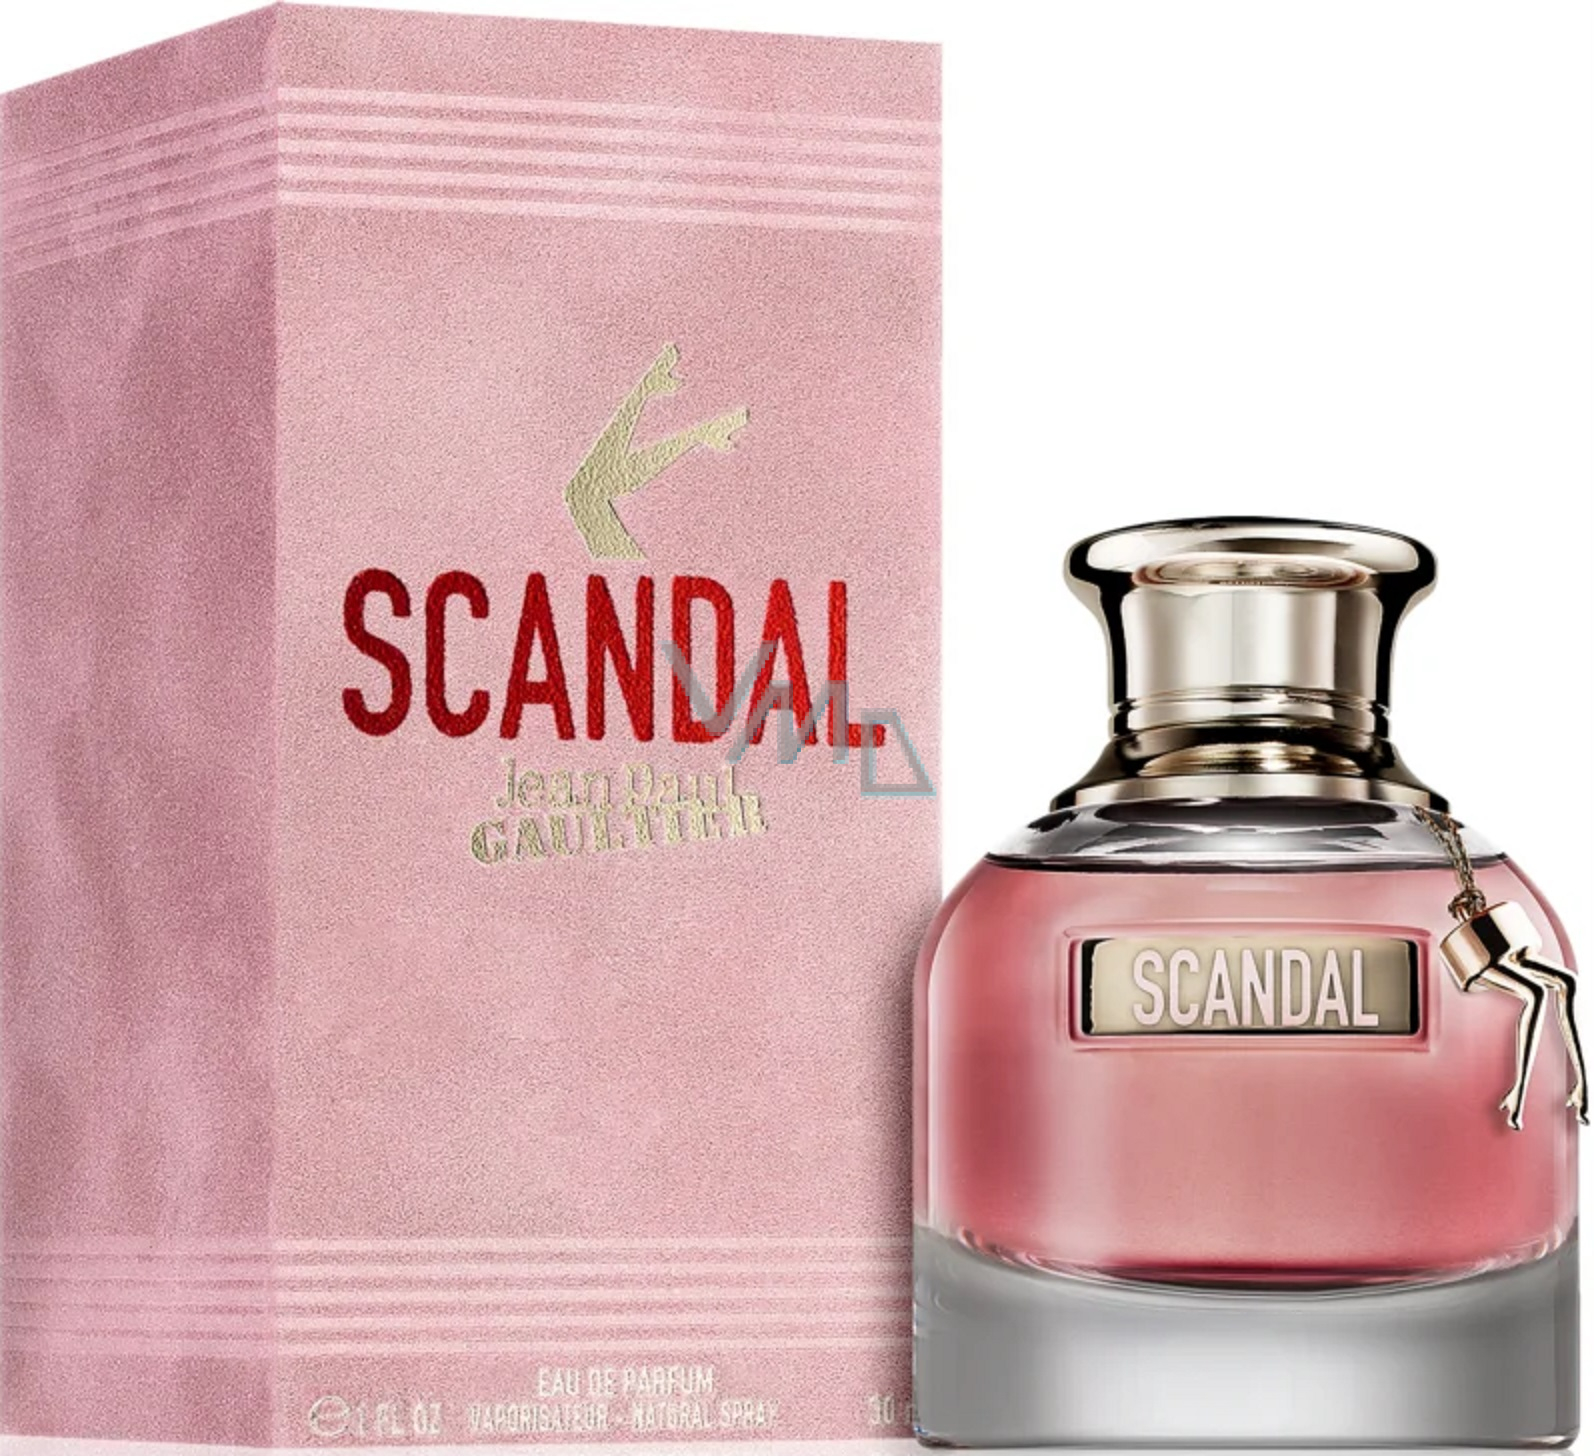 Jean Paul Gaultier Scandal eau de parfum for women 30 ml - VMD ...